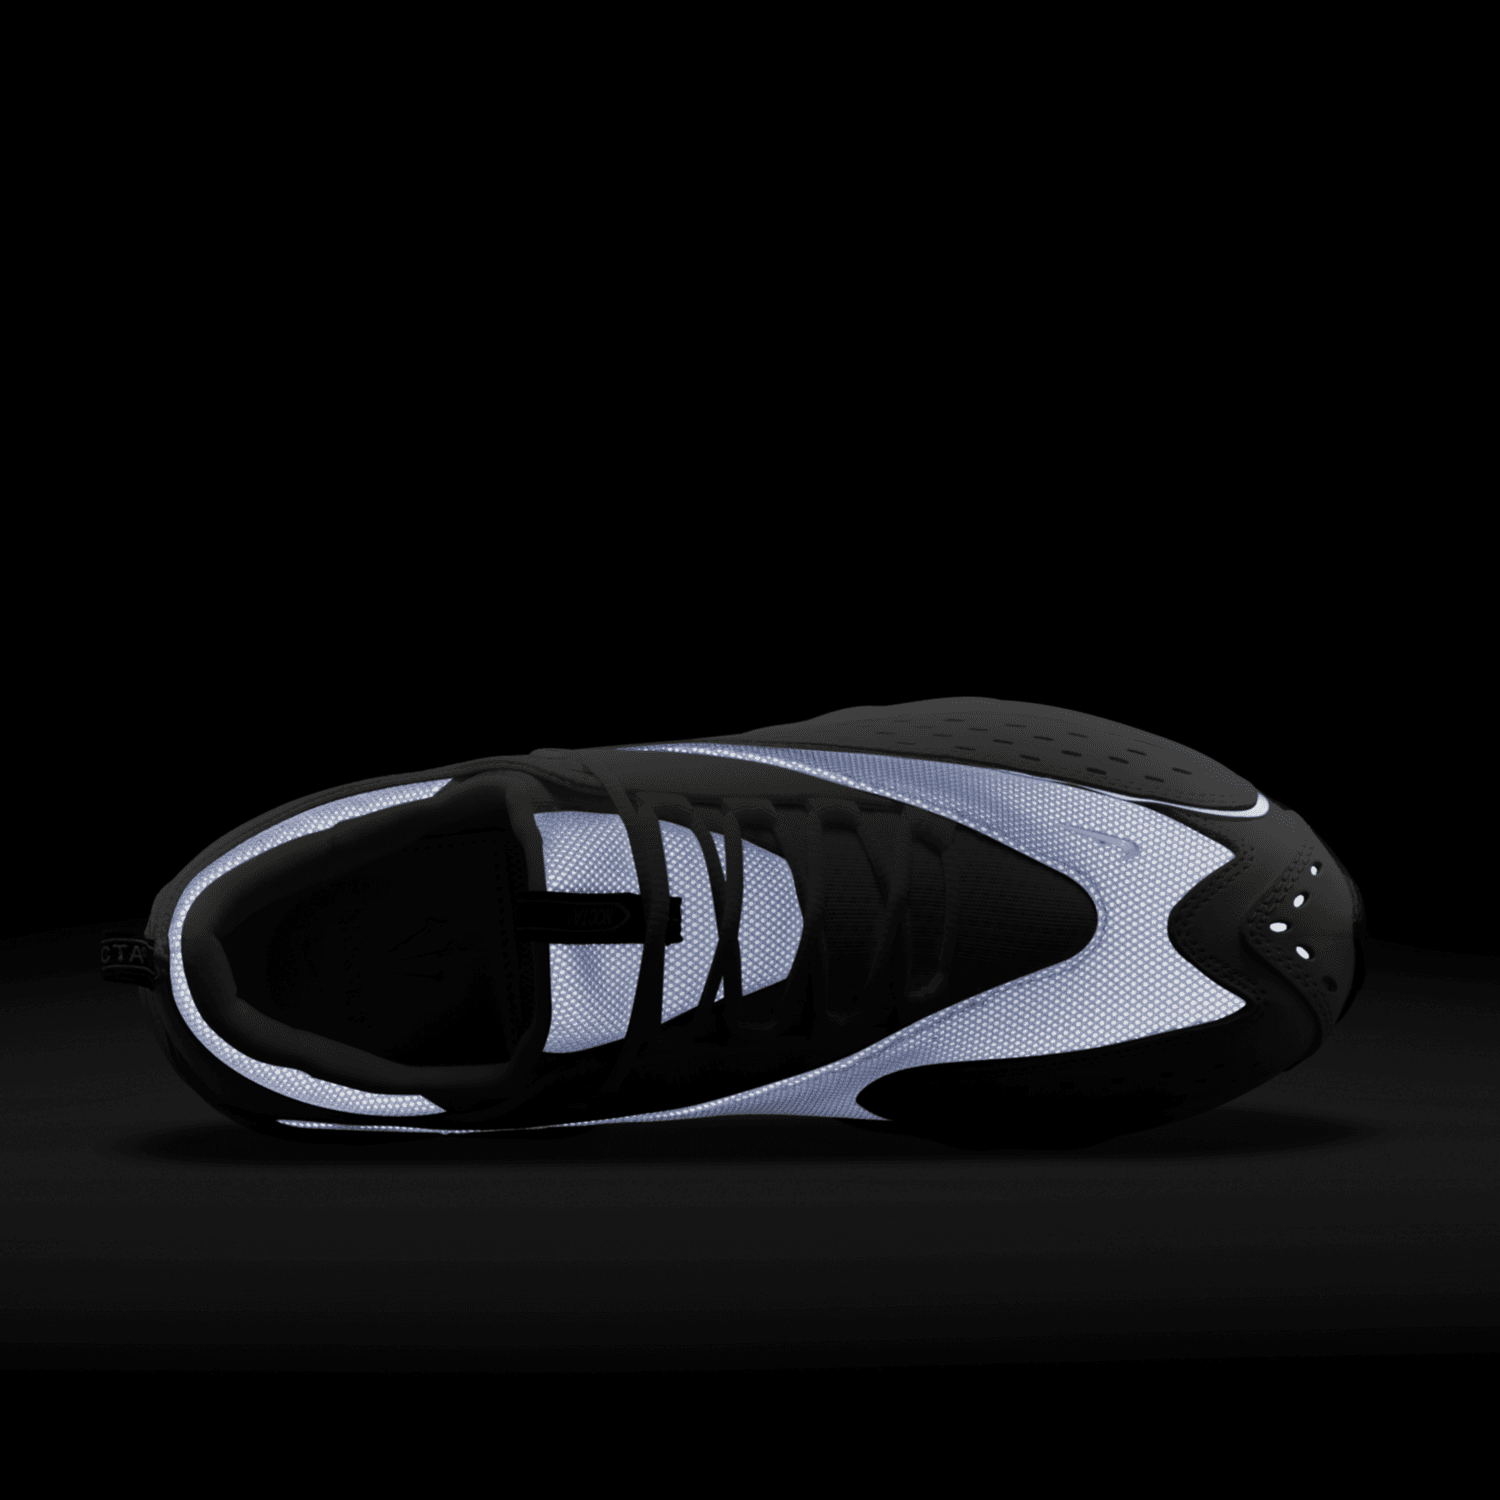 NOCTA x Nike Air Zoom Drive SP 'White' & 'Black'